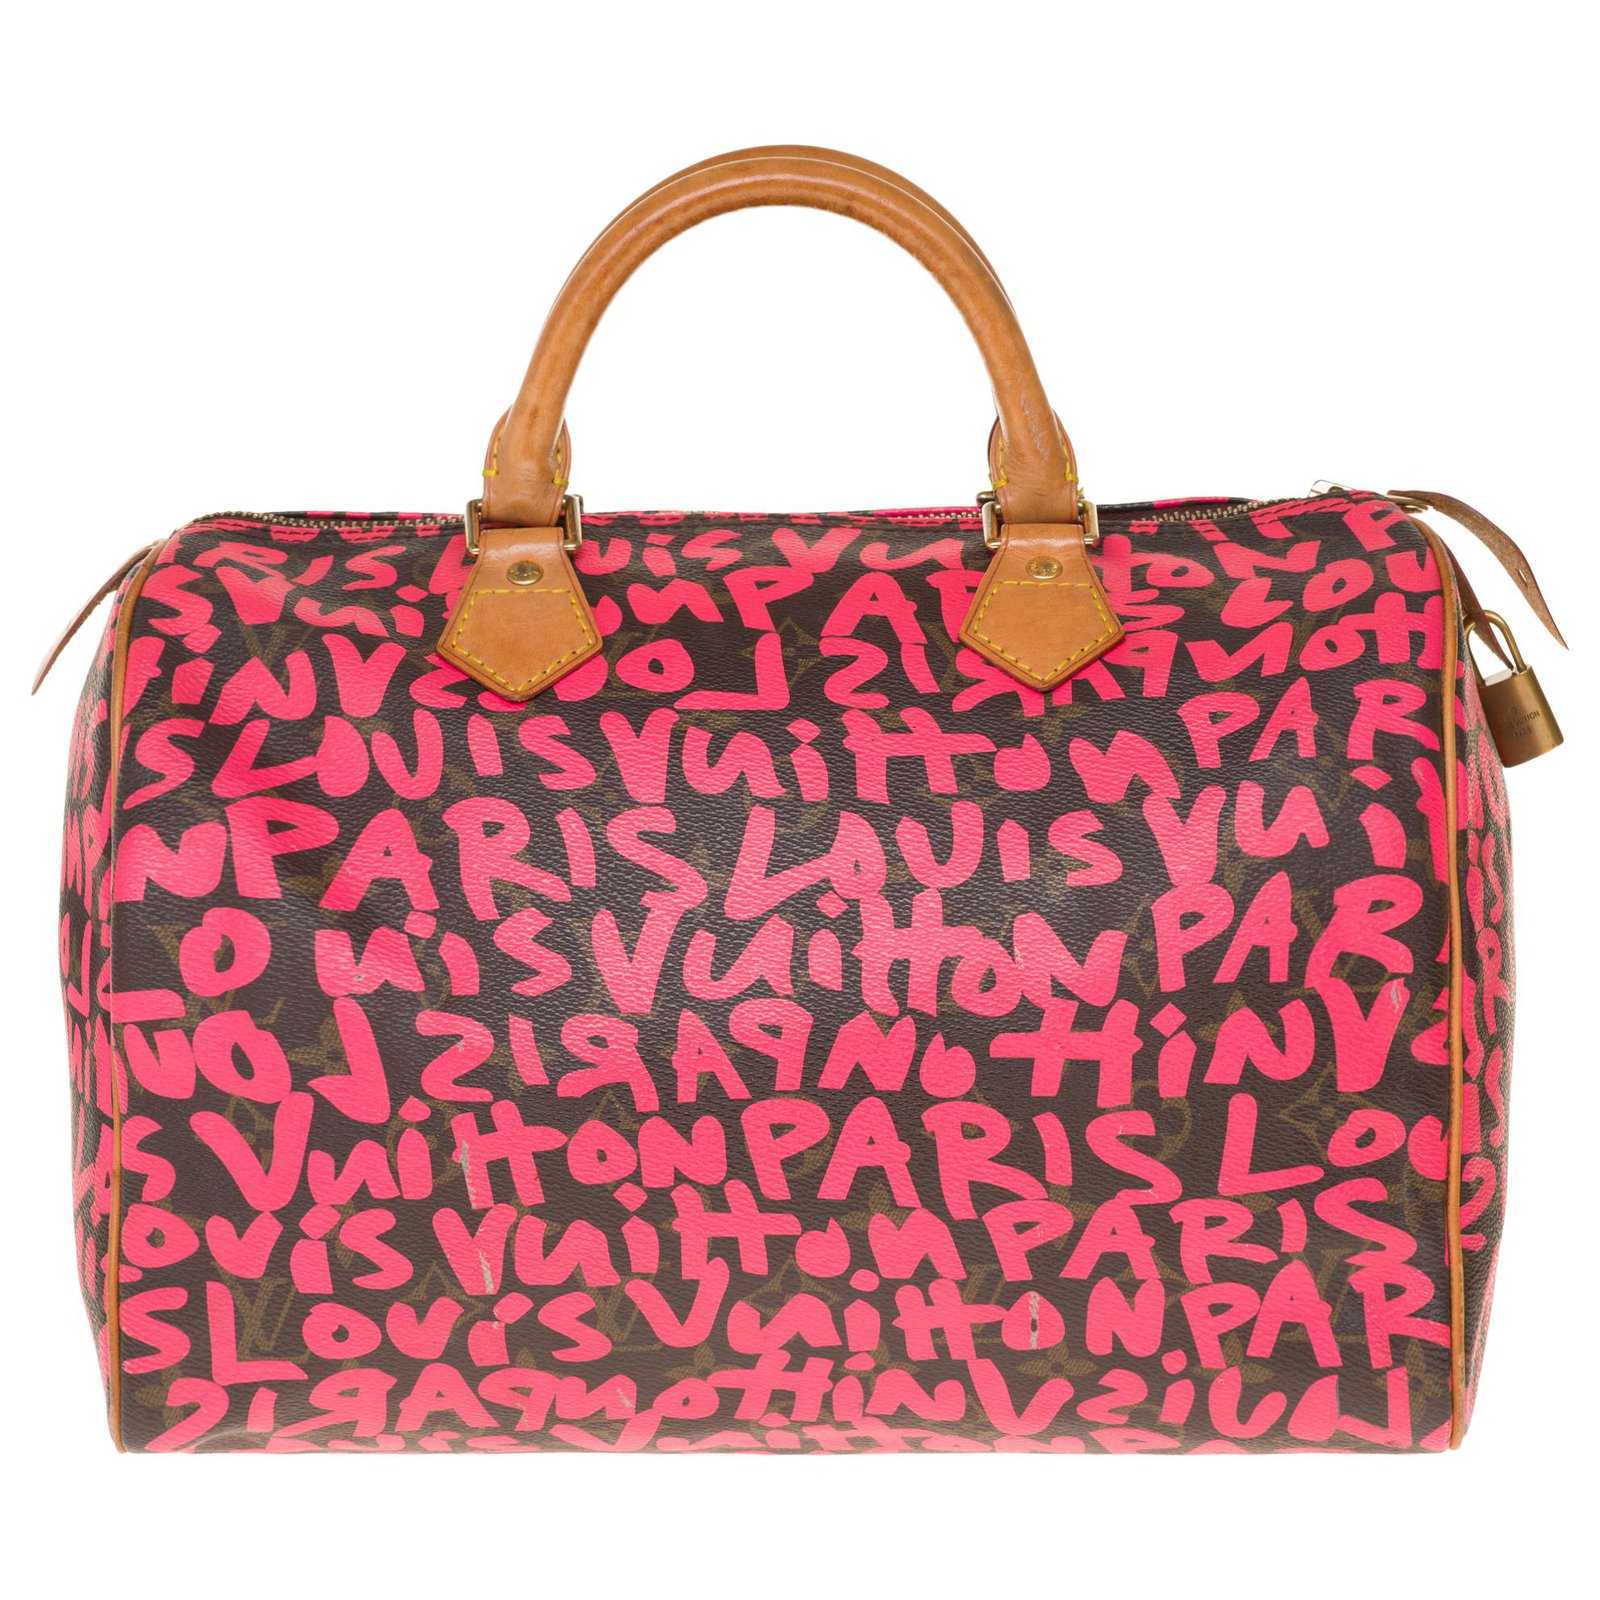 Rare Louis Vuitton Speedy handbag 30 limited edition Graffiti by